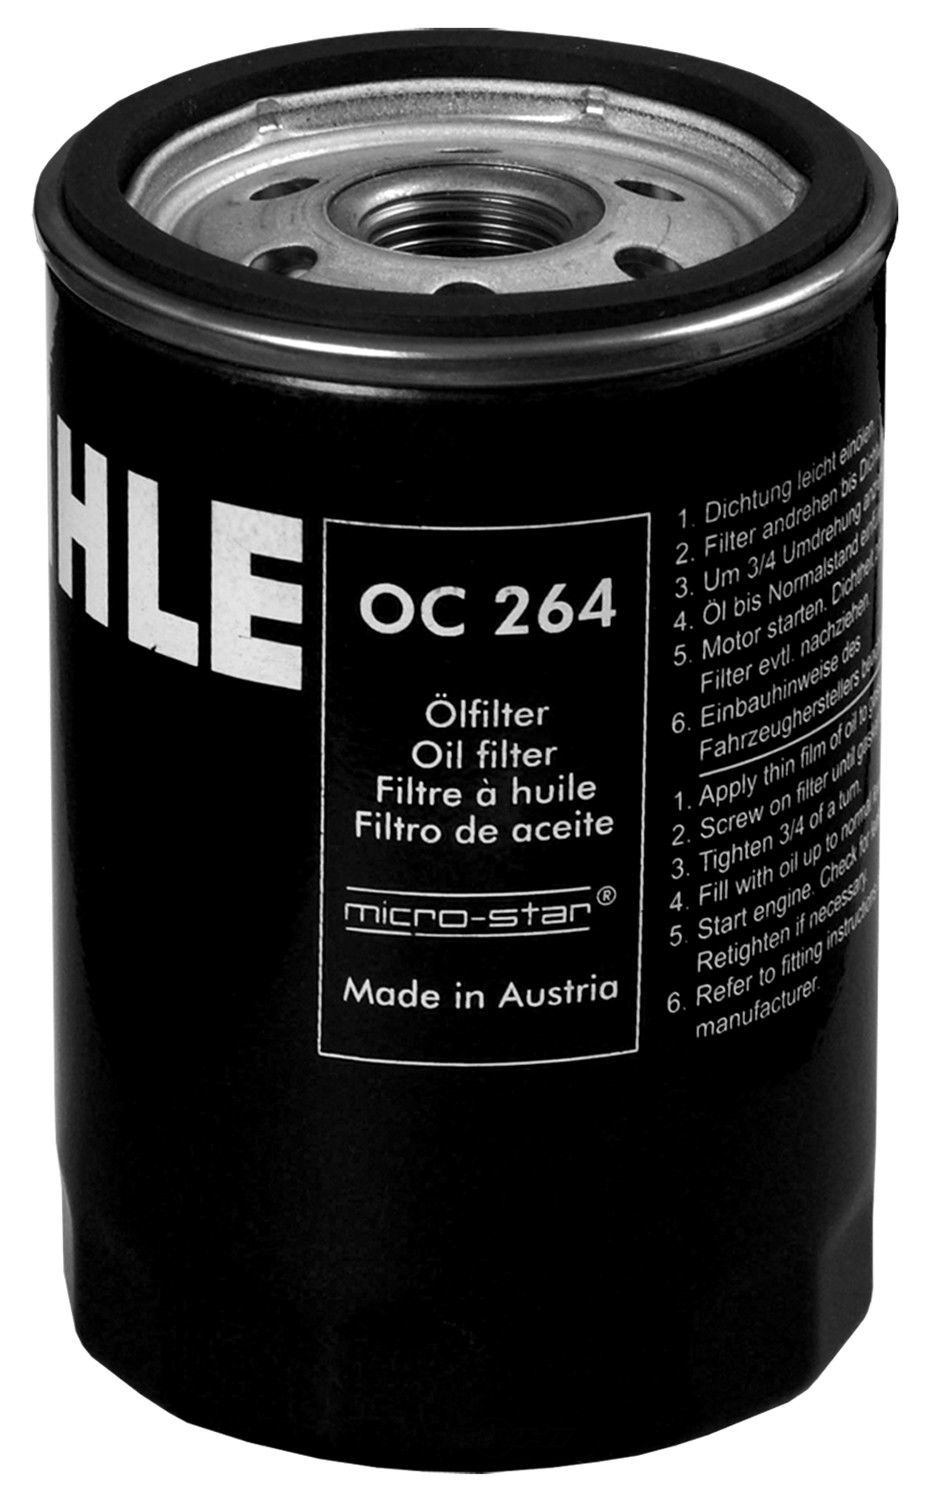 MAHLE ORIGINAL - Engine Oil Filter - MHL OC 264